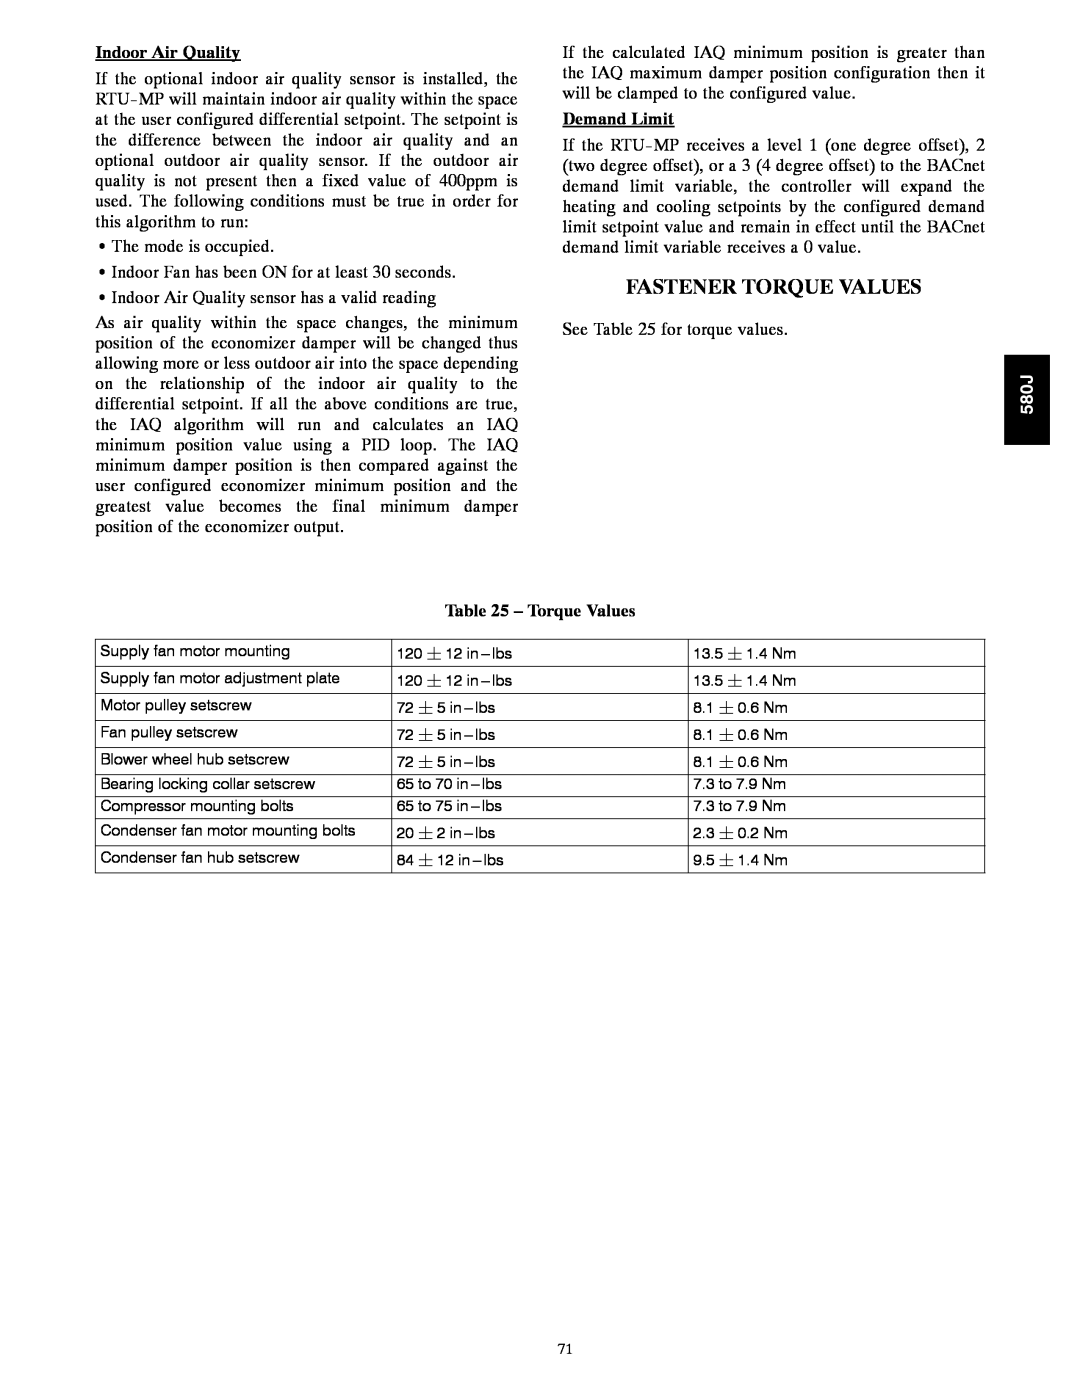 Bryant 580J*08--14D appendix Fastener Torque Values, Indoor Air Quality, Demand Limit 